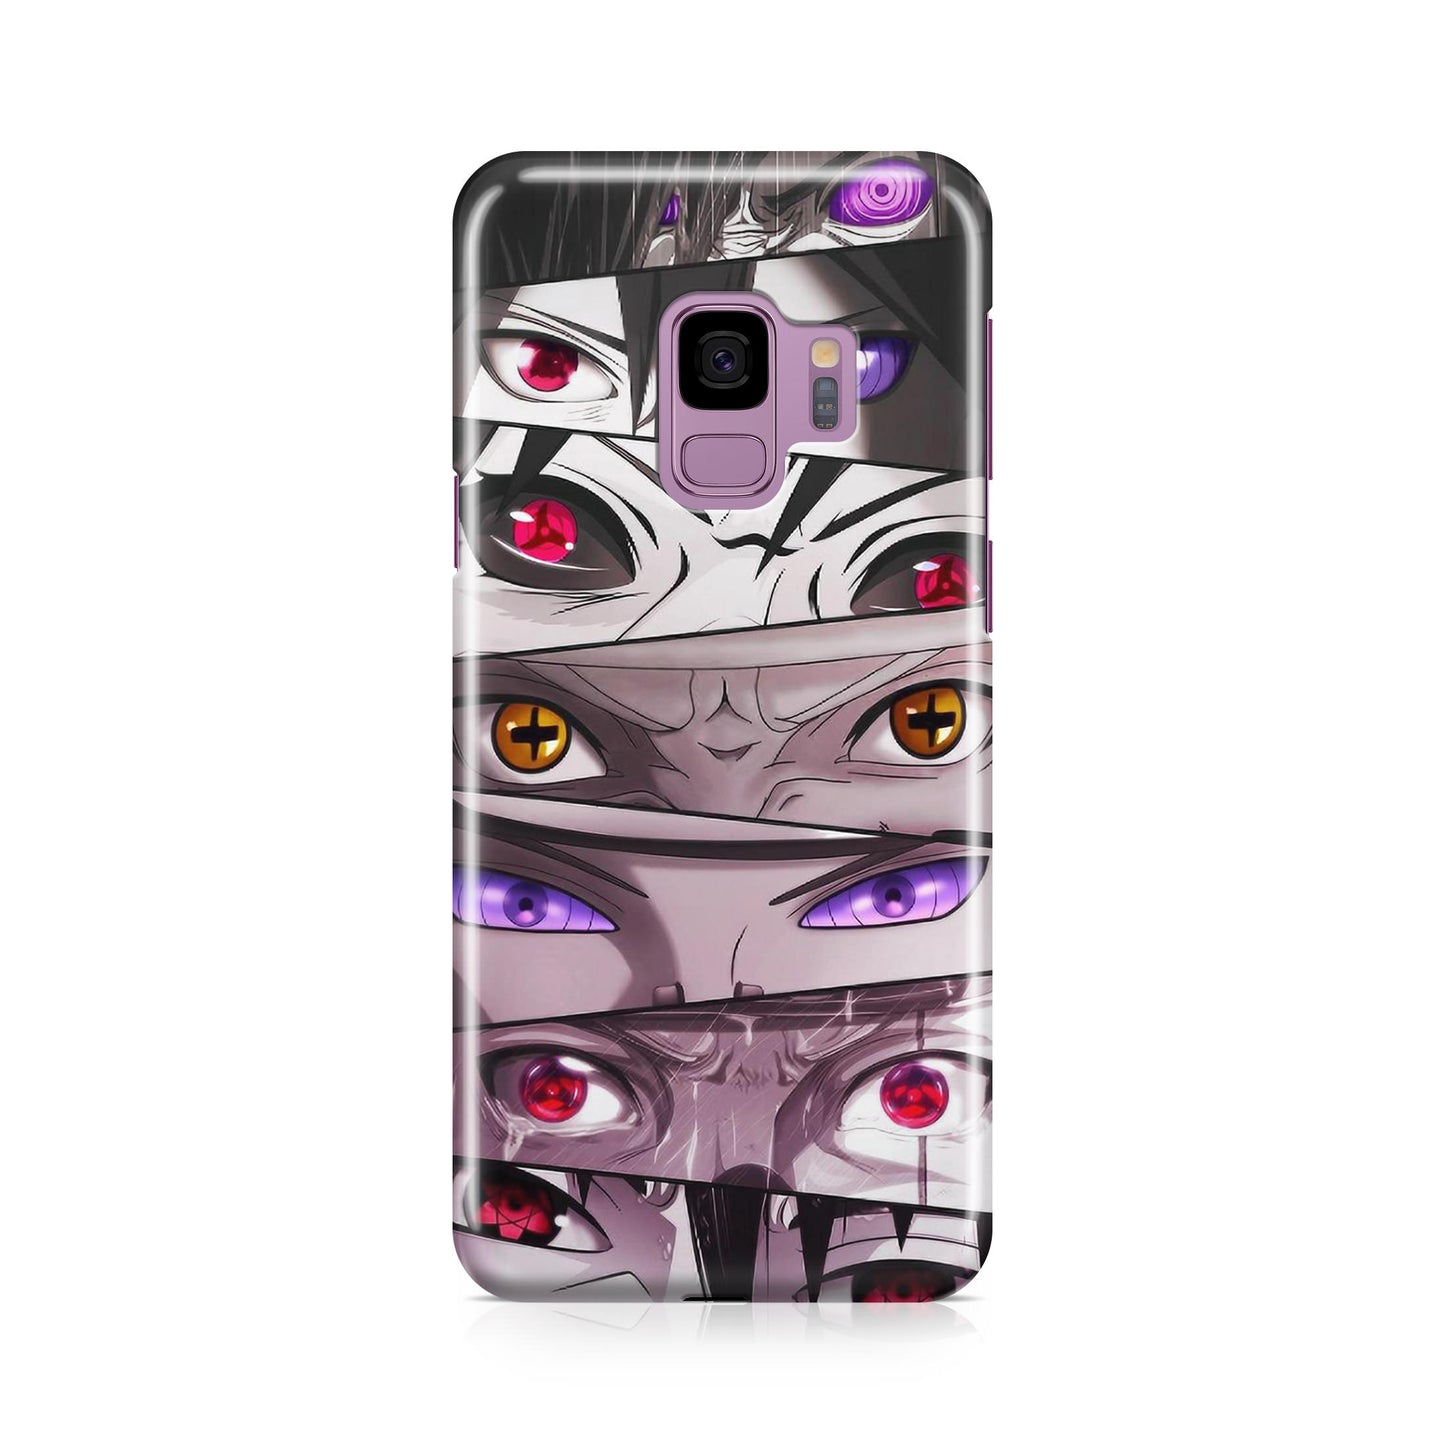 The Powerful Eyes Galaxy S9 Case